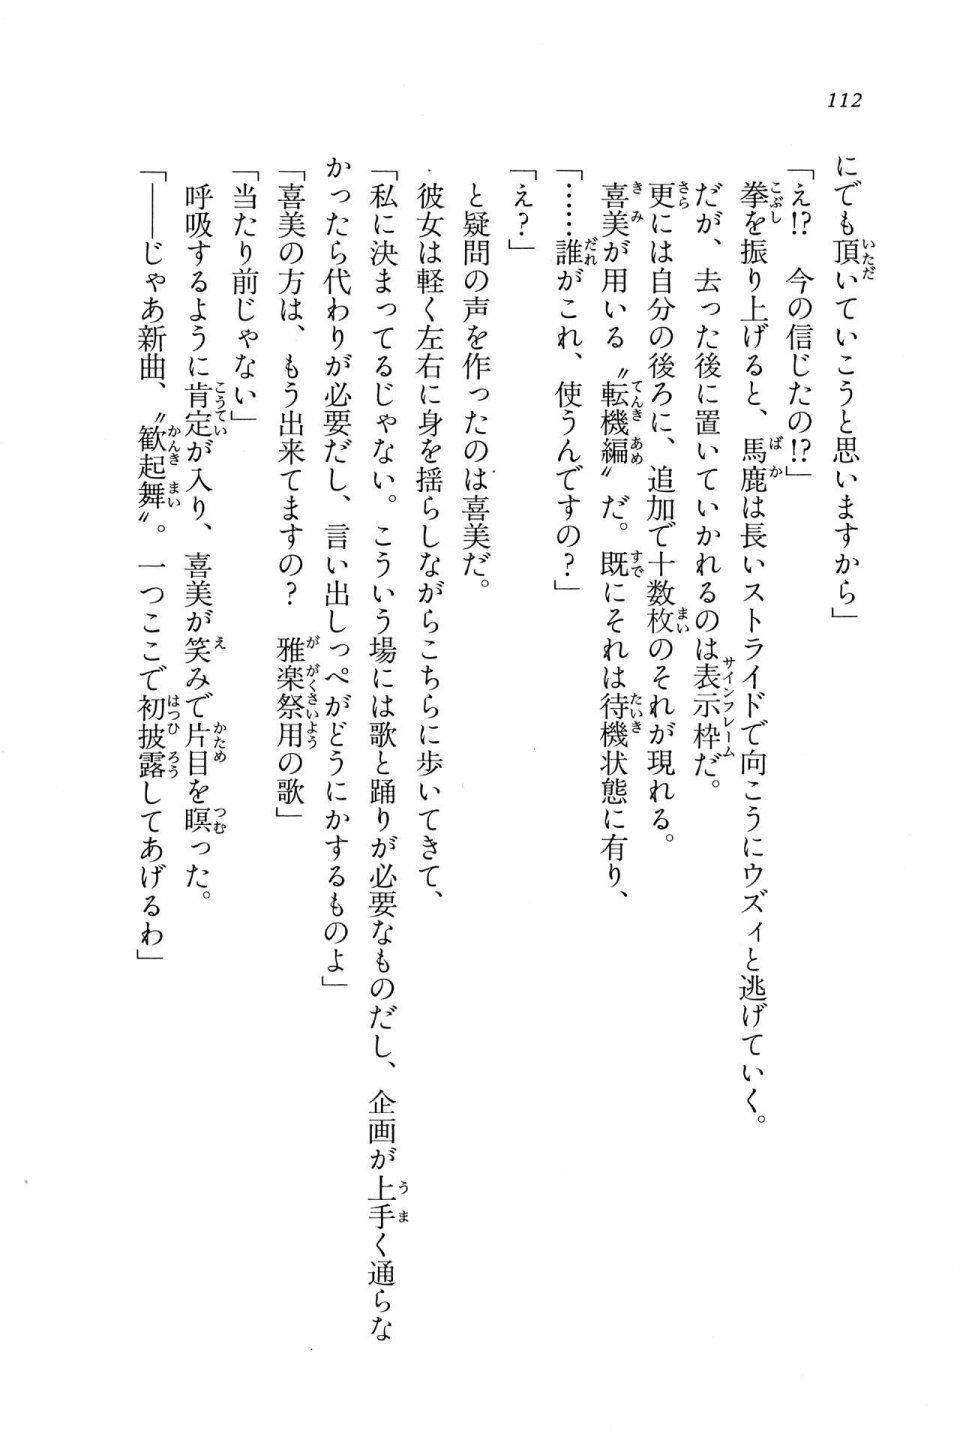 Kyoukai Senjou no Horizon BD Special Mininovel Vol 7(4A) - Photo #116